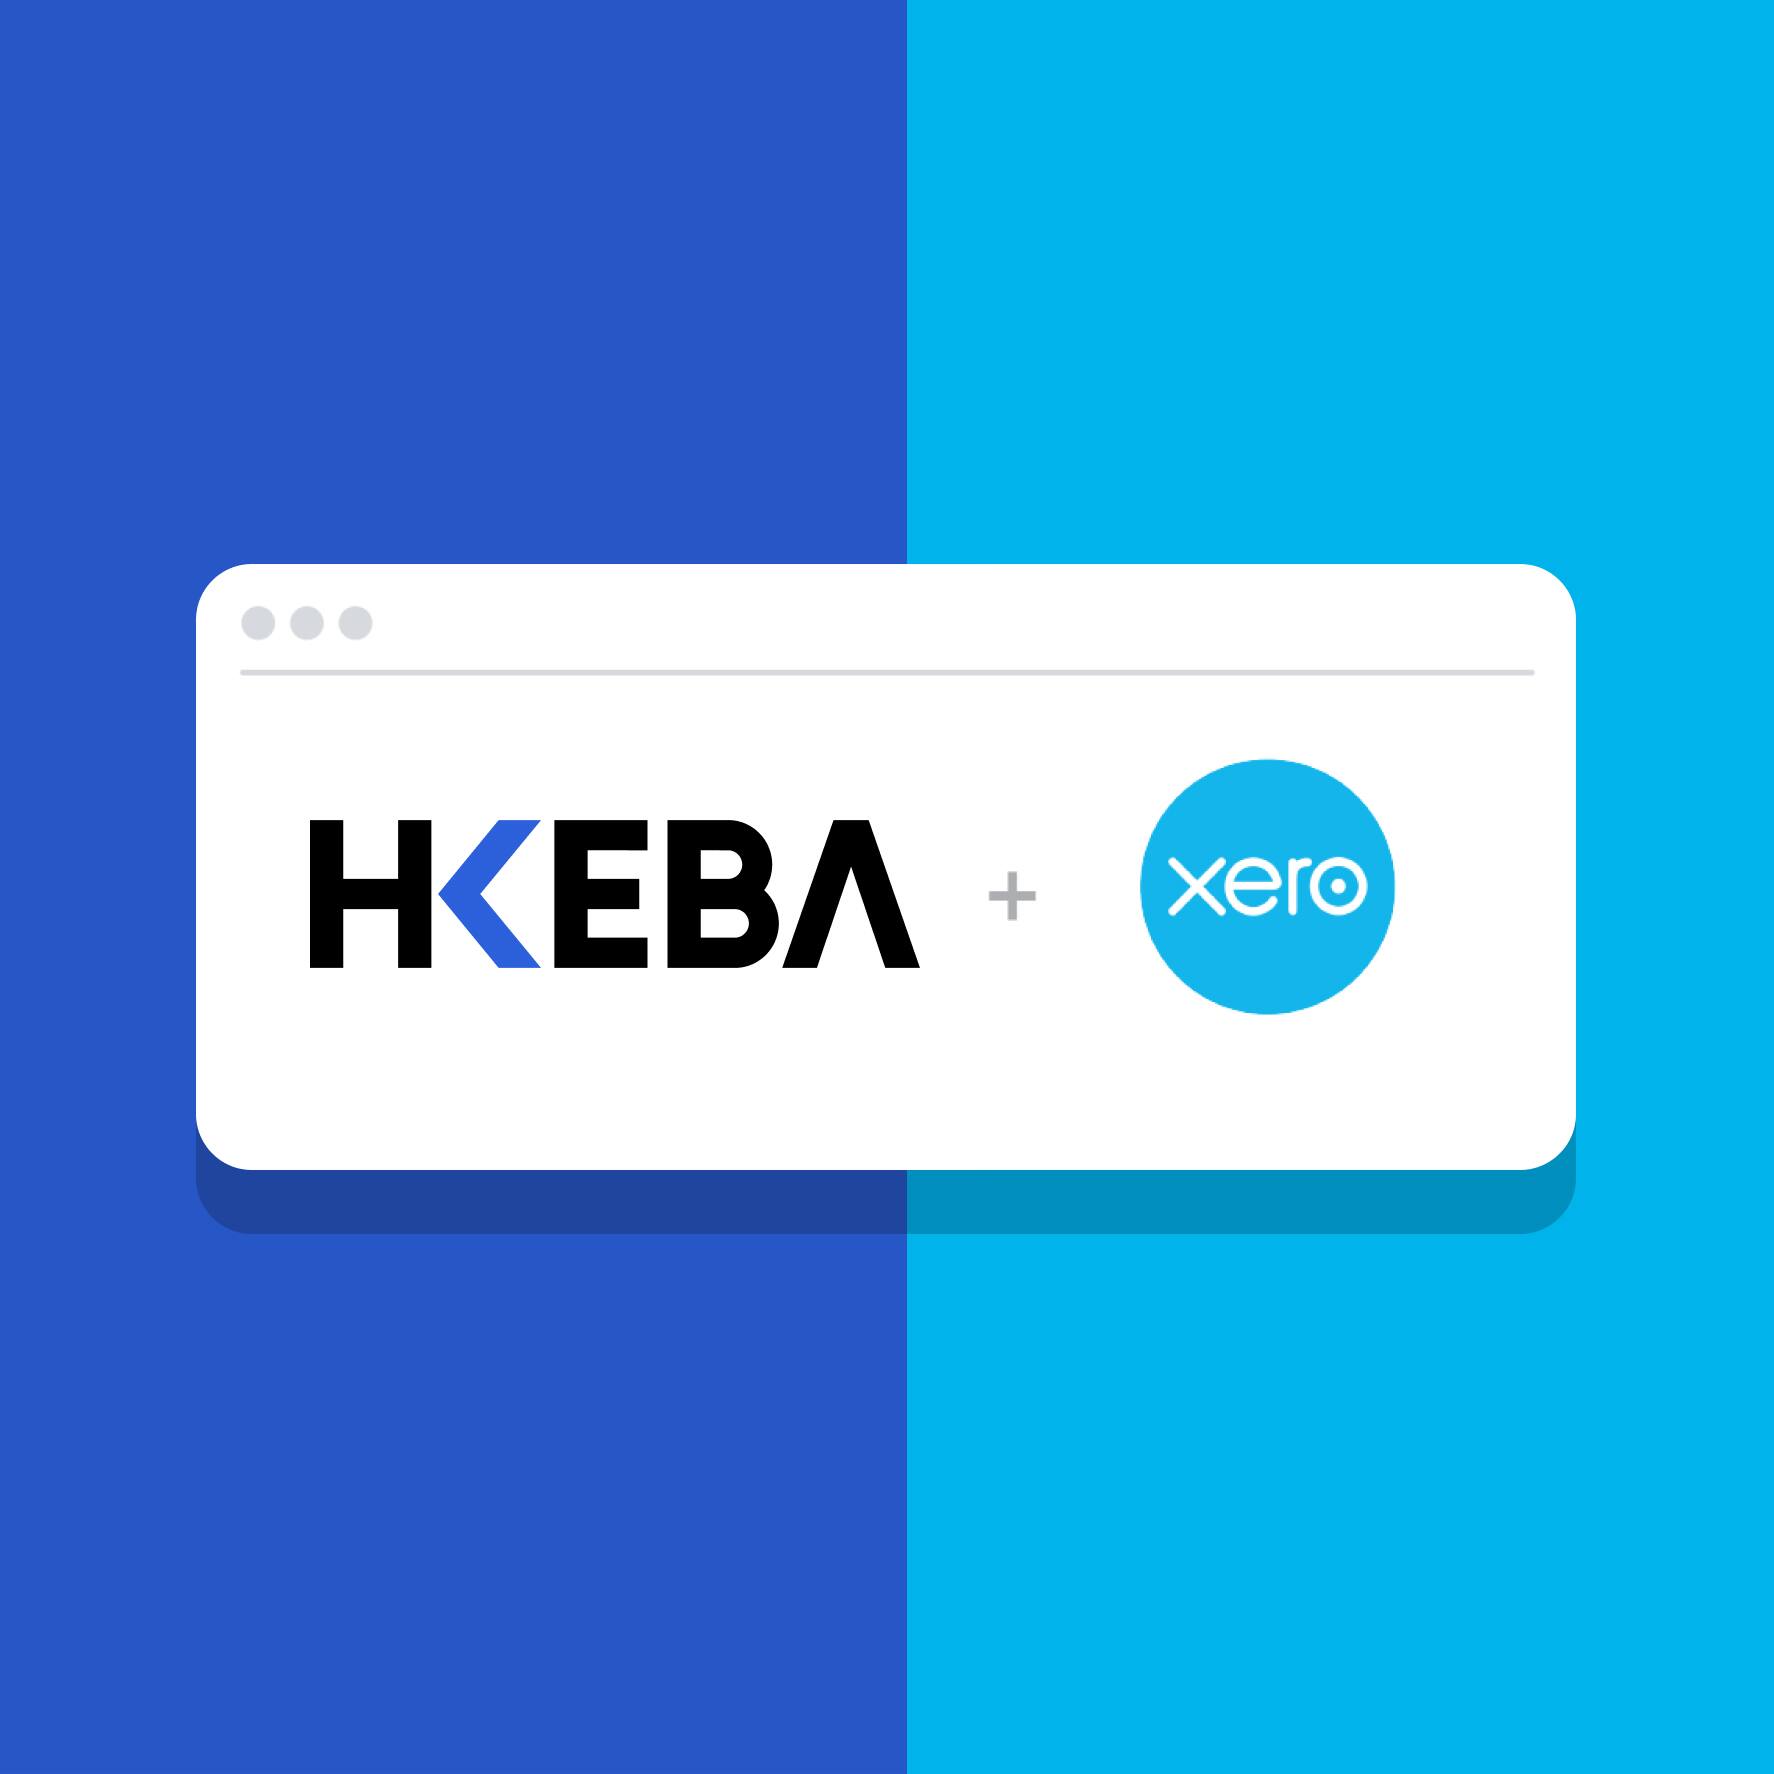 HKEBA logo and Xero logo